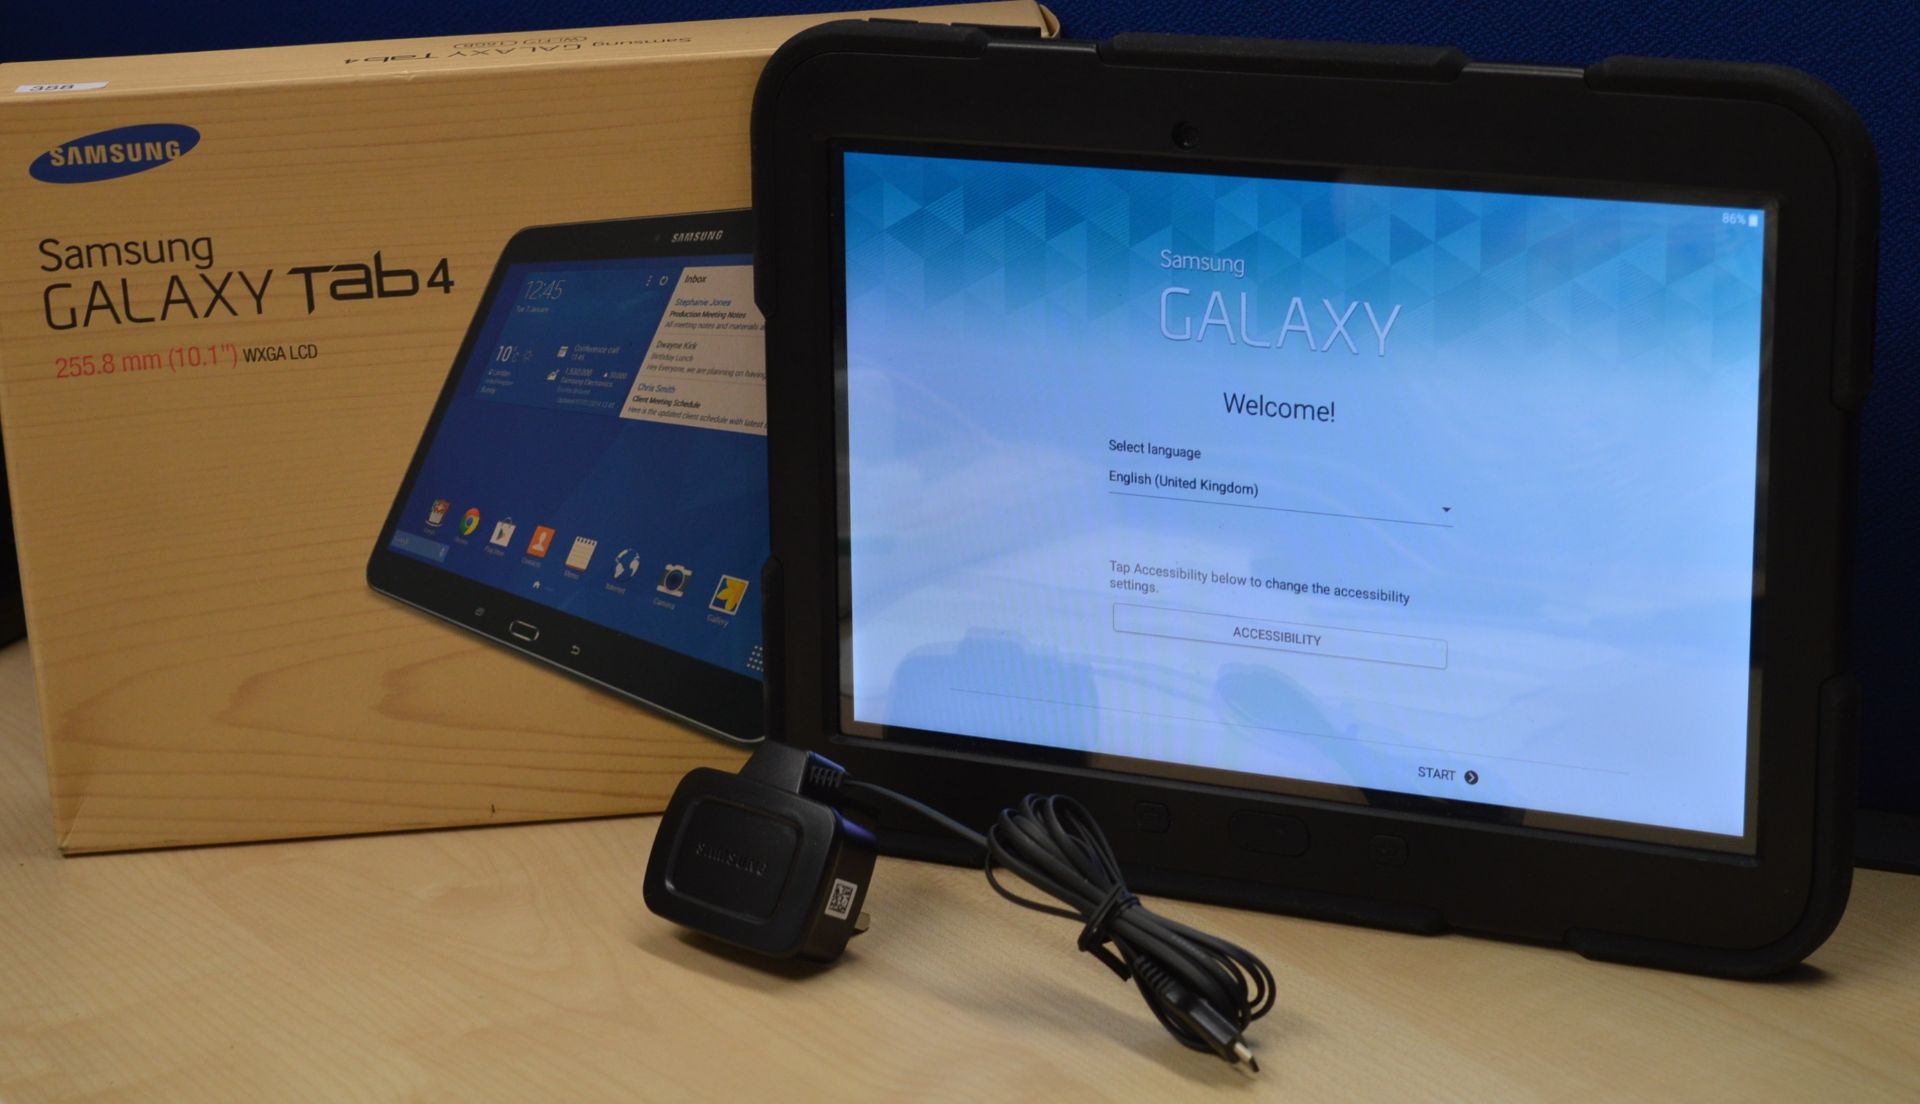 1 x Samsung Galaxy Tab 4 - Model SM-T530 - Features 10.1 Inch LCD Screen, 1.2ghz 1.5gb Ram, 16gb Rom - Image 4 of 4